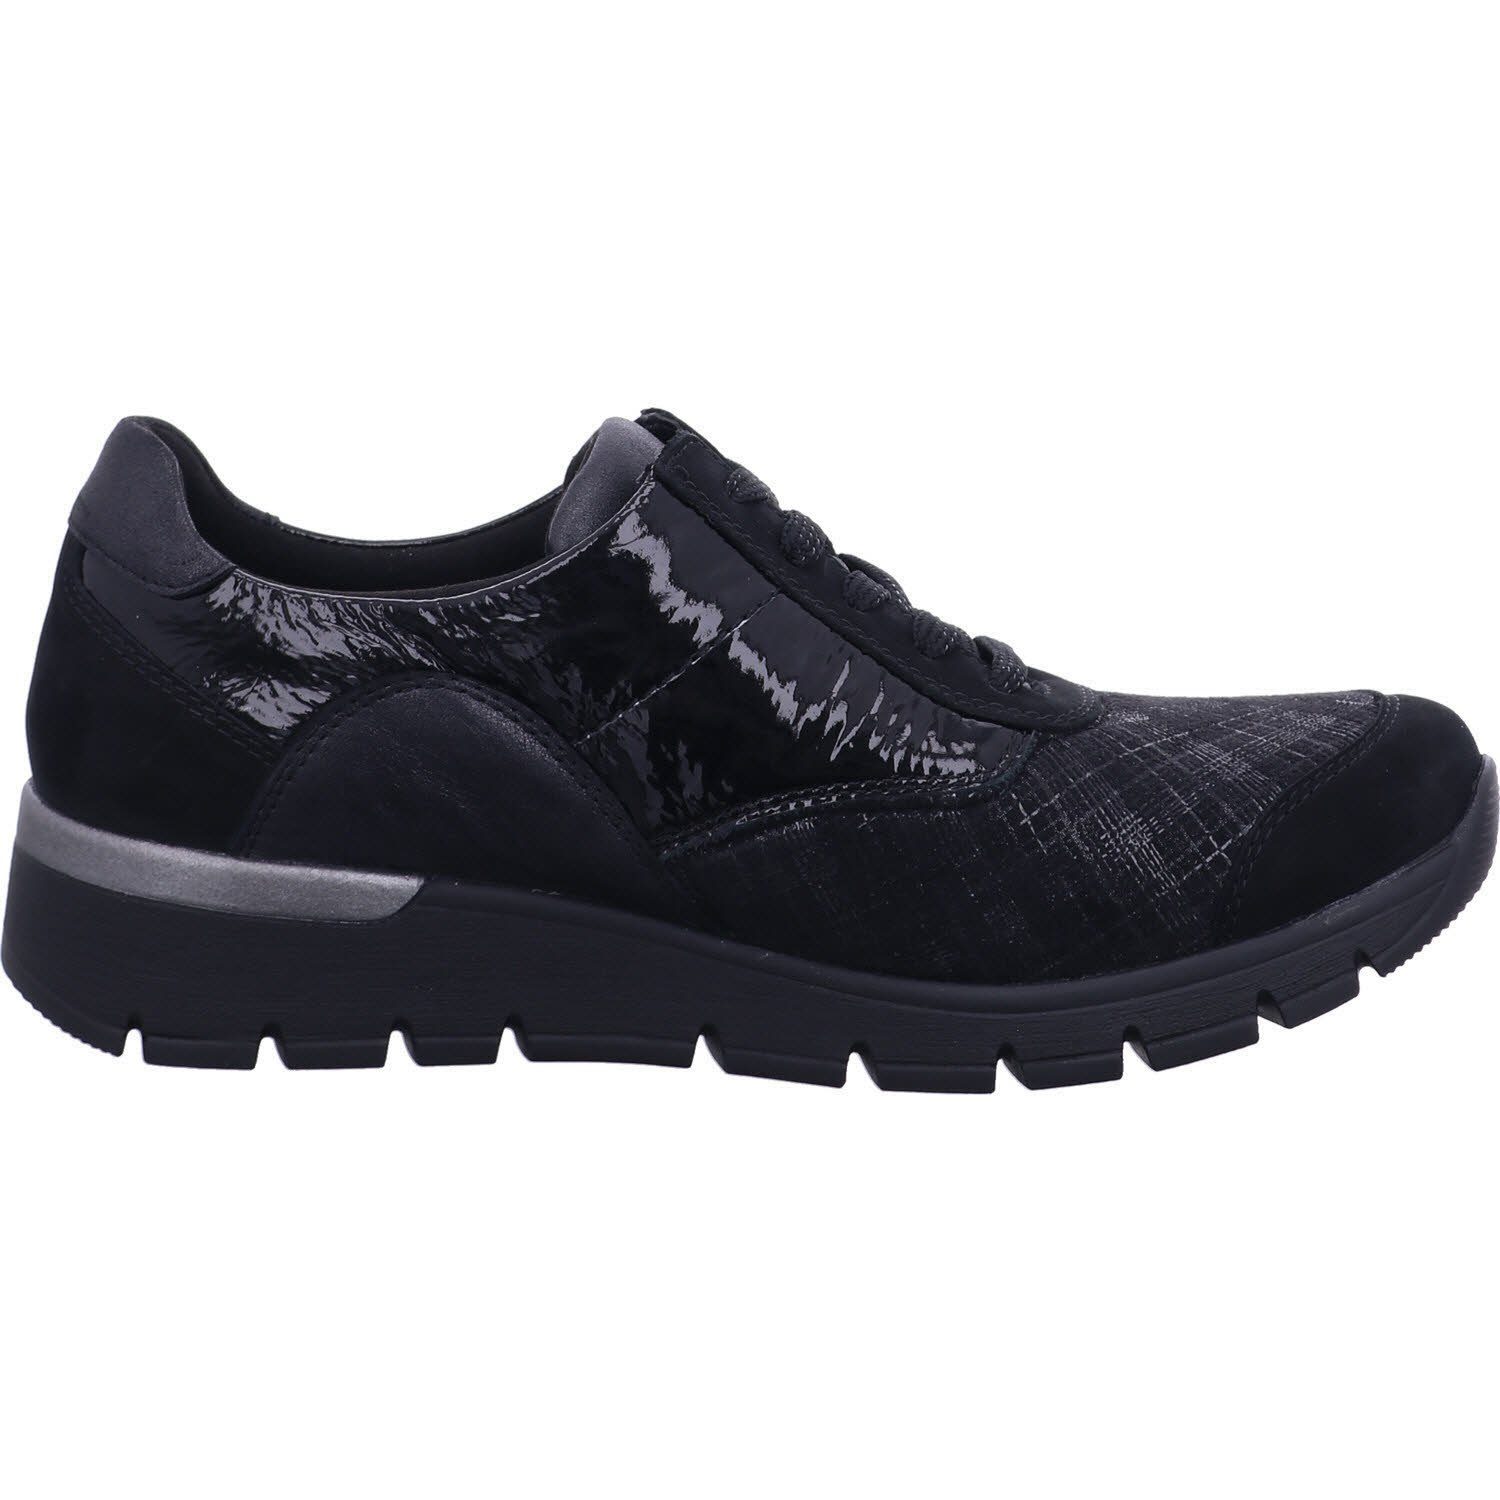 Waldläufer Sneaker schwarz-kombiniert-schwarz-kombiniert